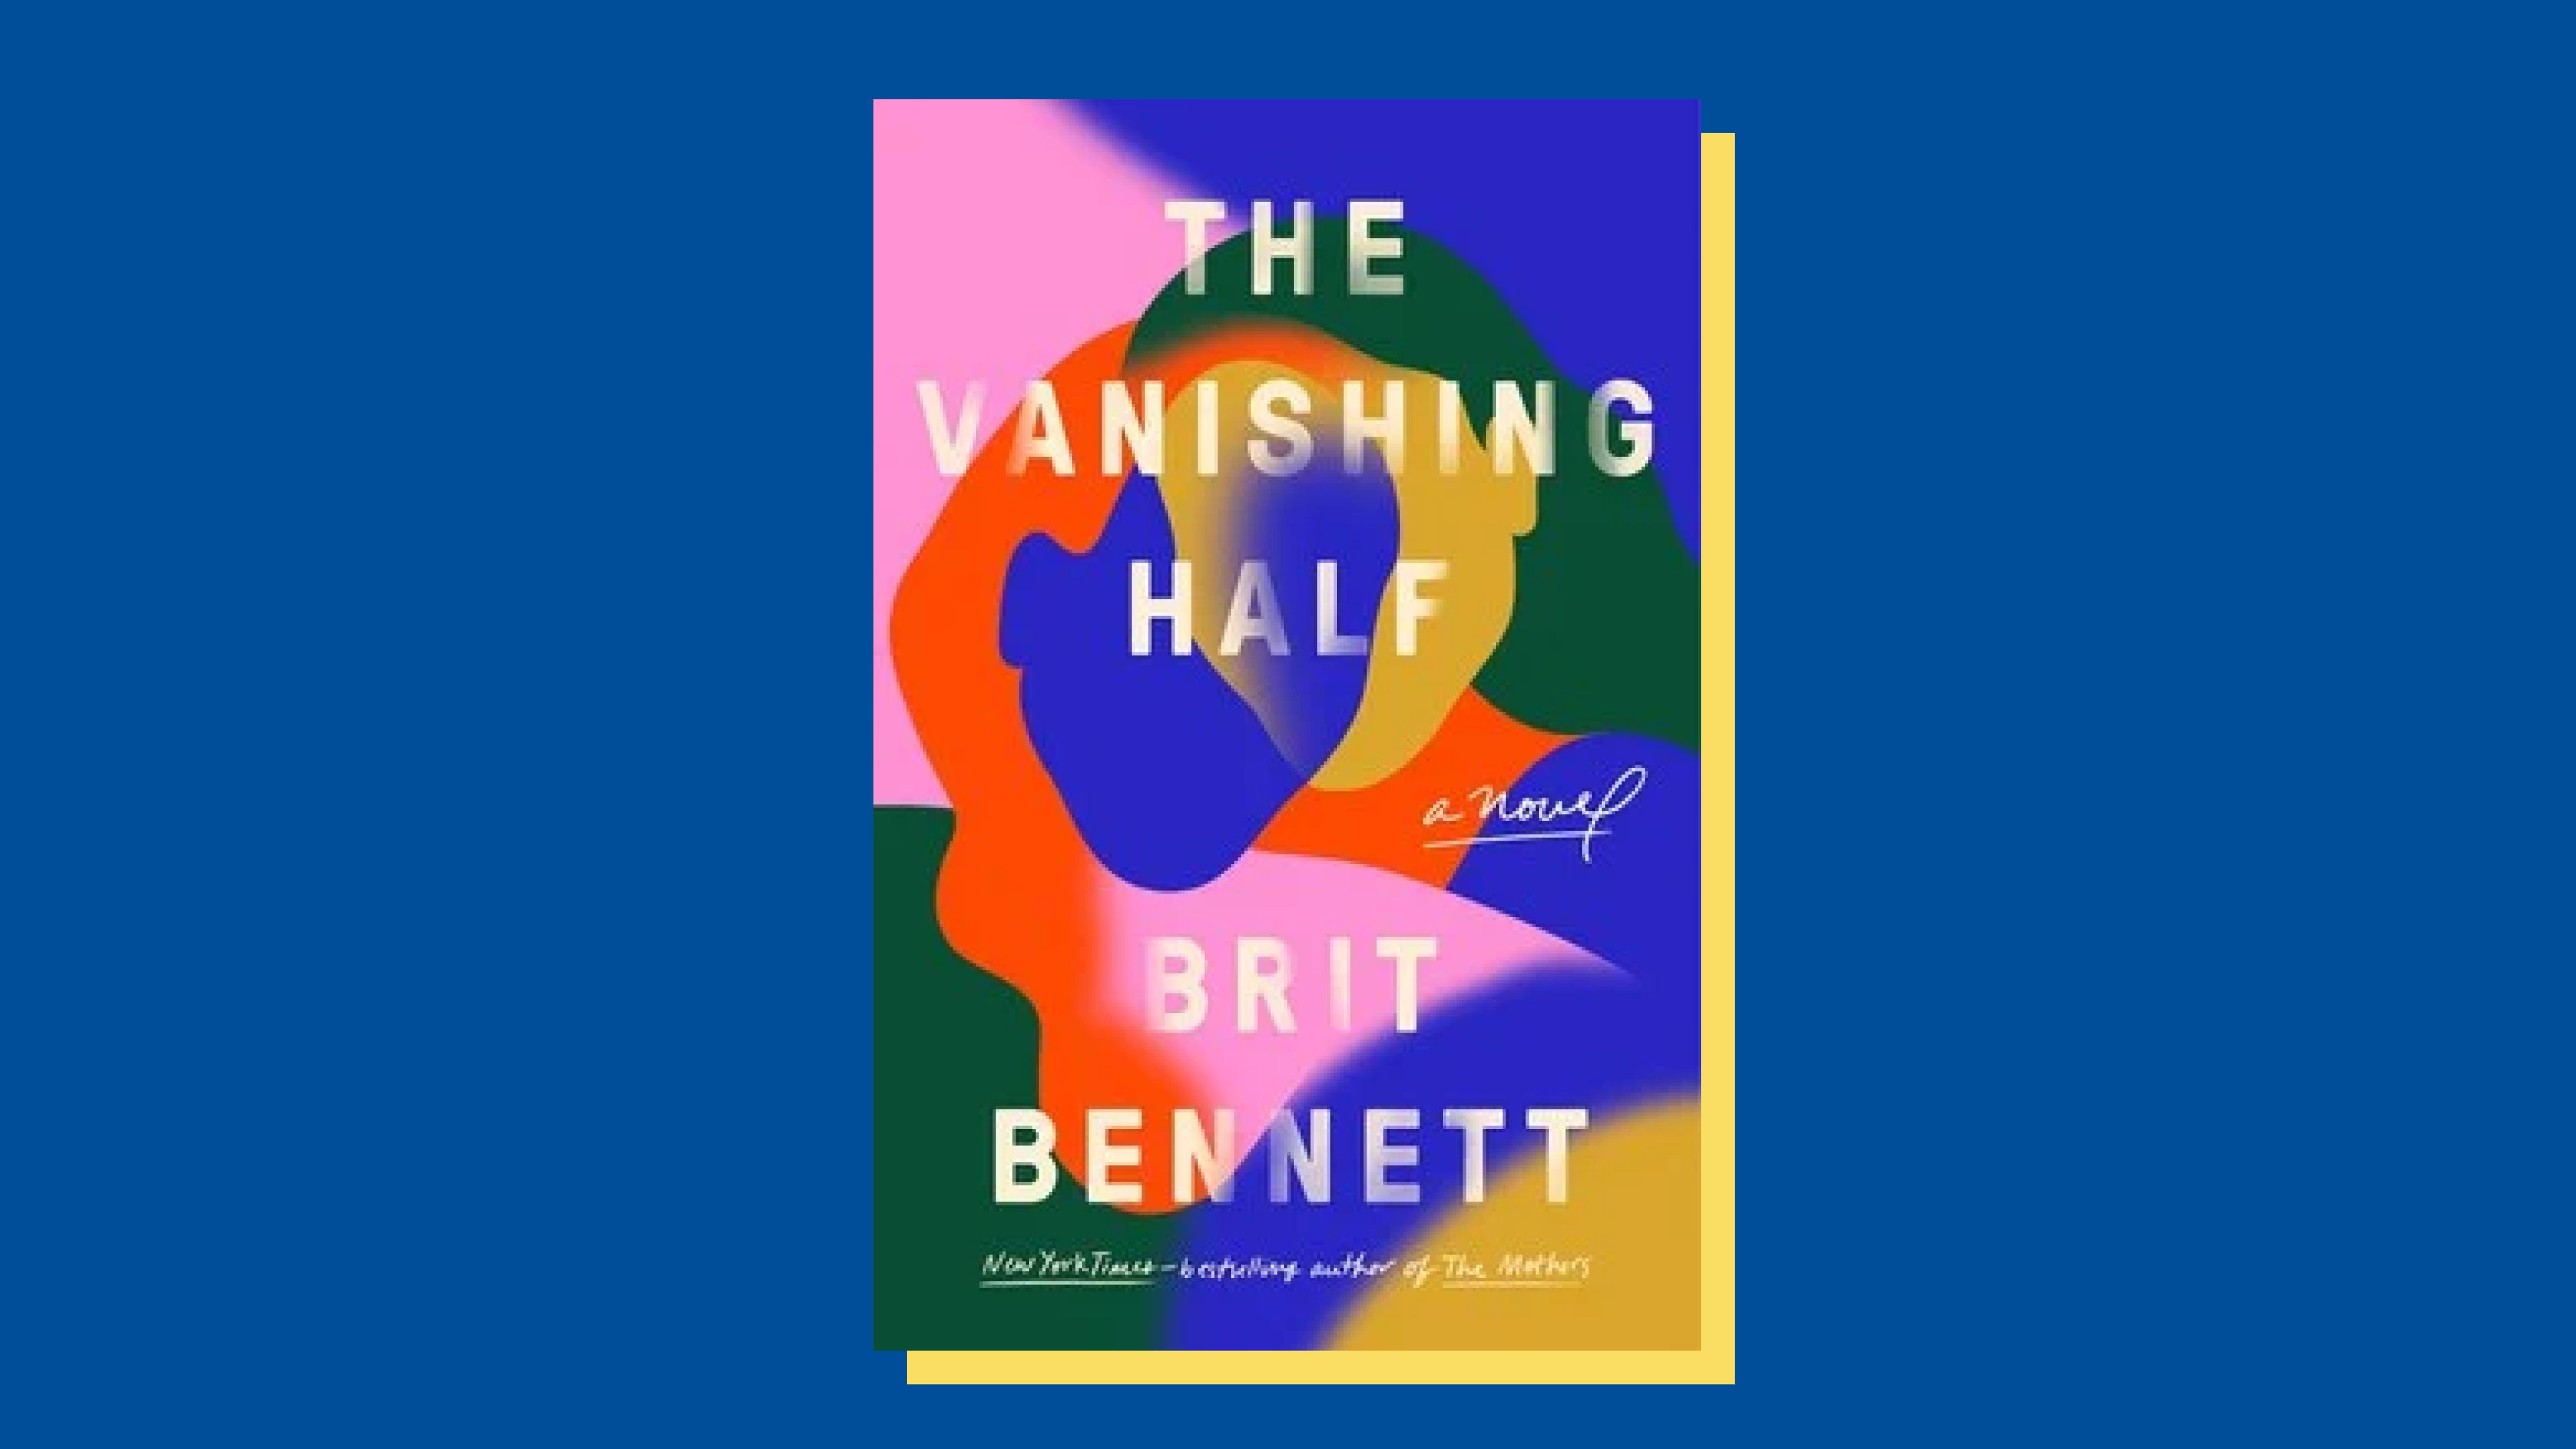 “The Vanishing Half” by Brit Bennett